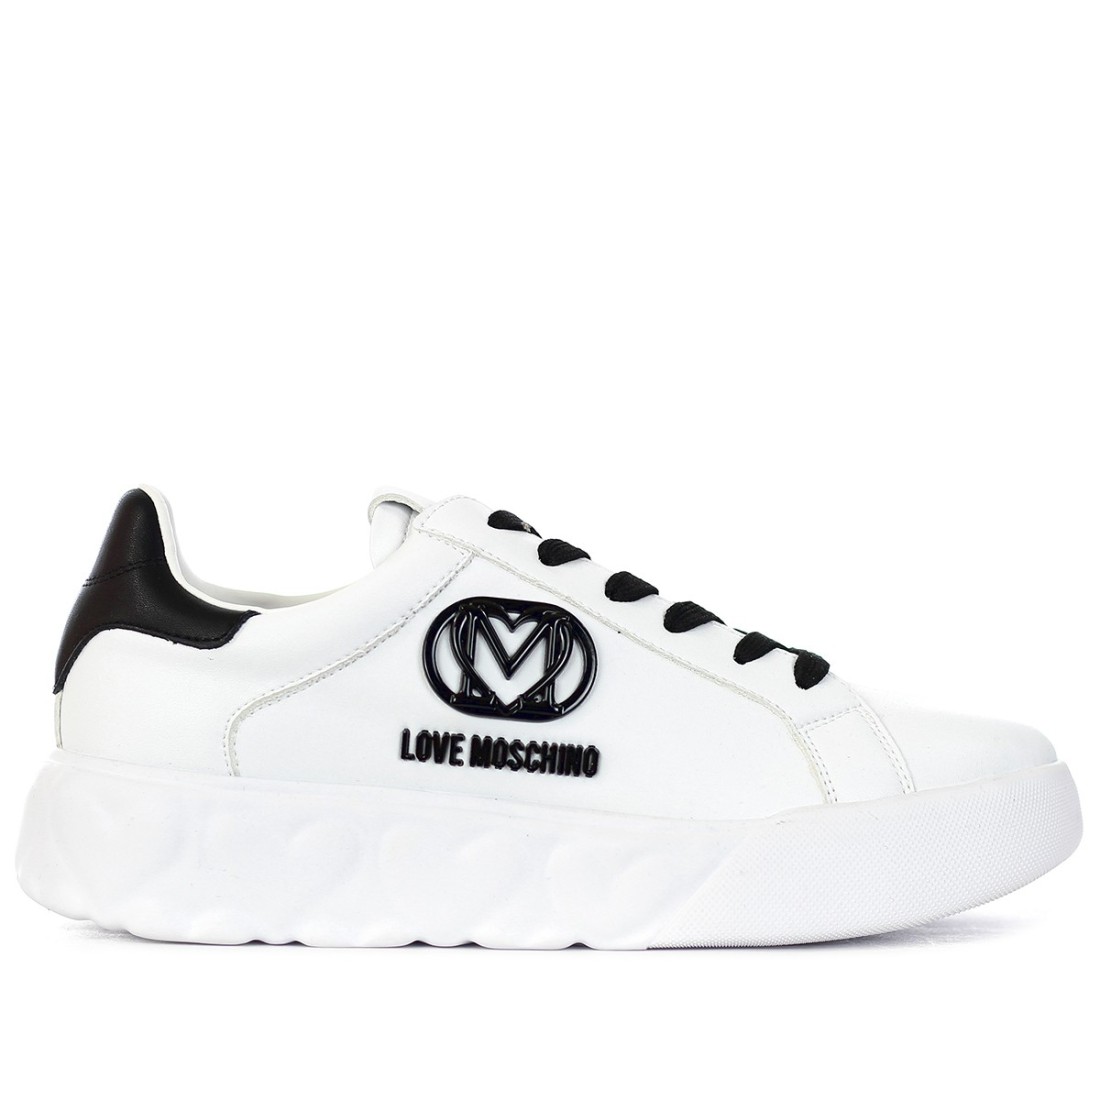 Image of LOVE MOSCHINO - Sneakers con logo - Colore: Bianco